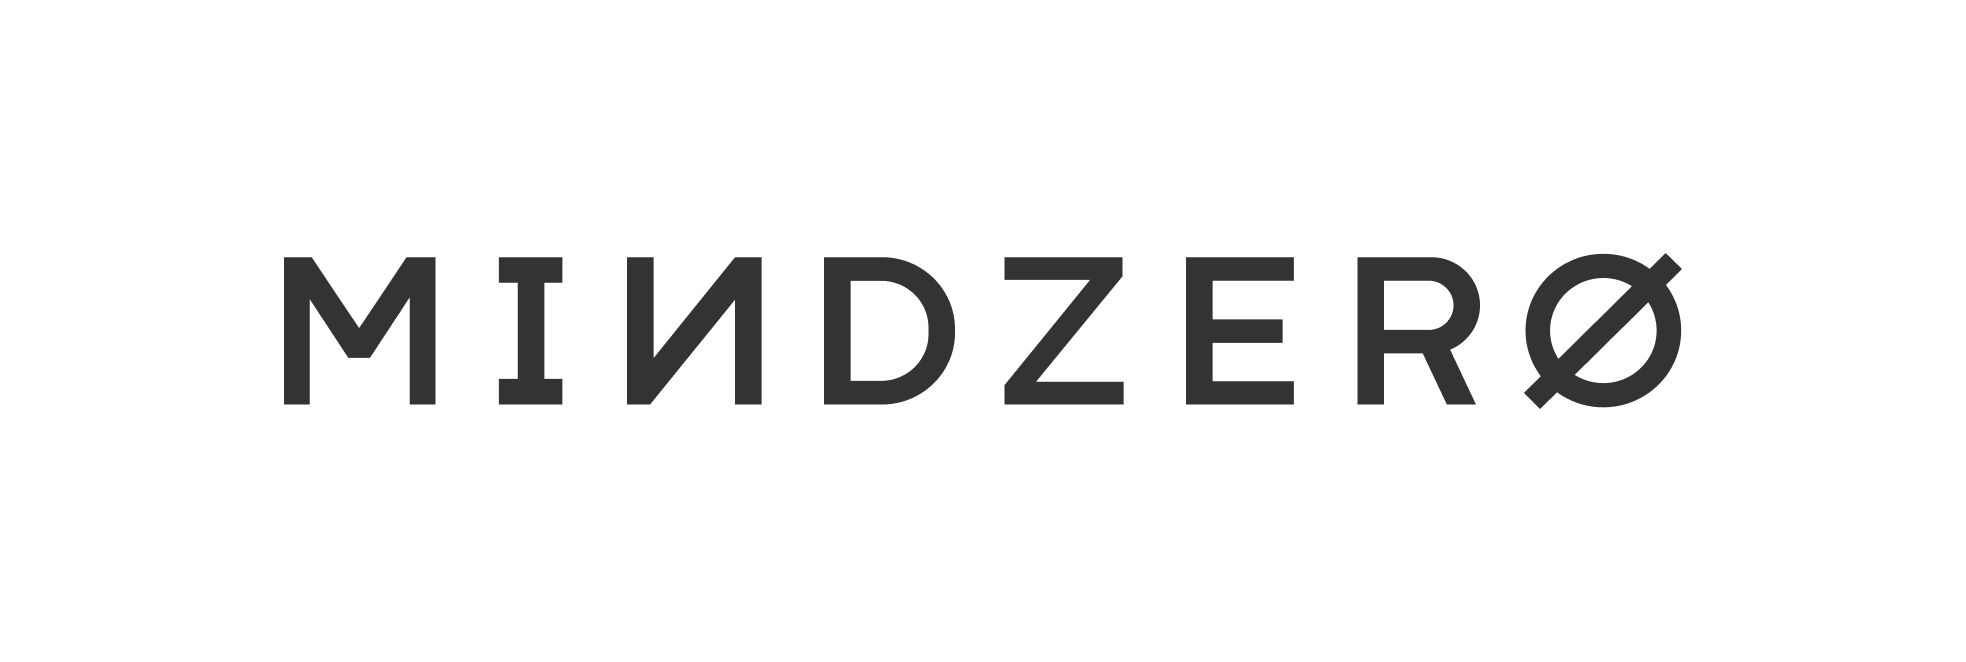 mindzero logo